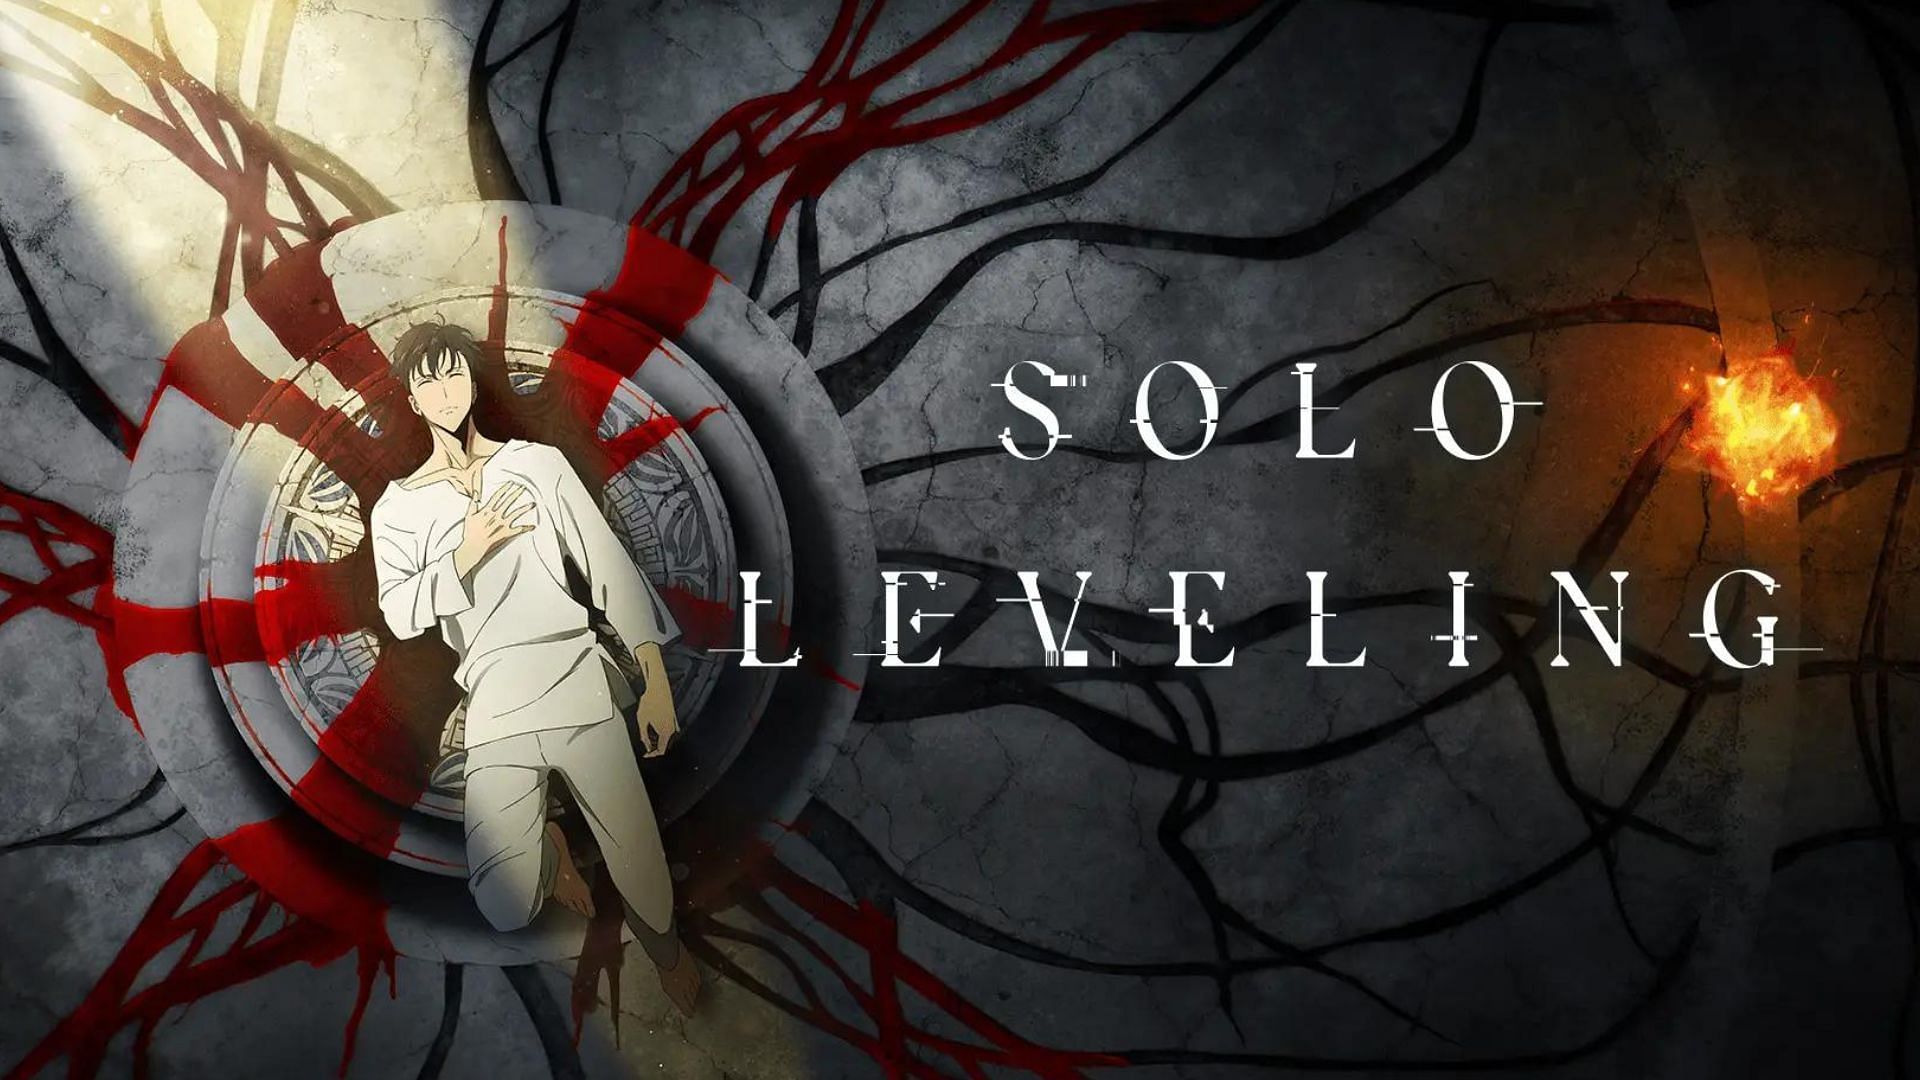 Wiki About Solo Leveling Manga/Manhwa Info! - Solo Leveling